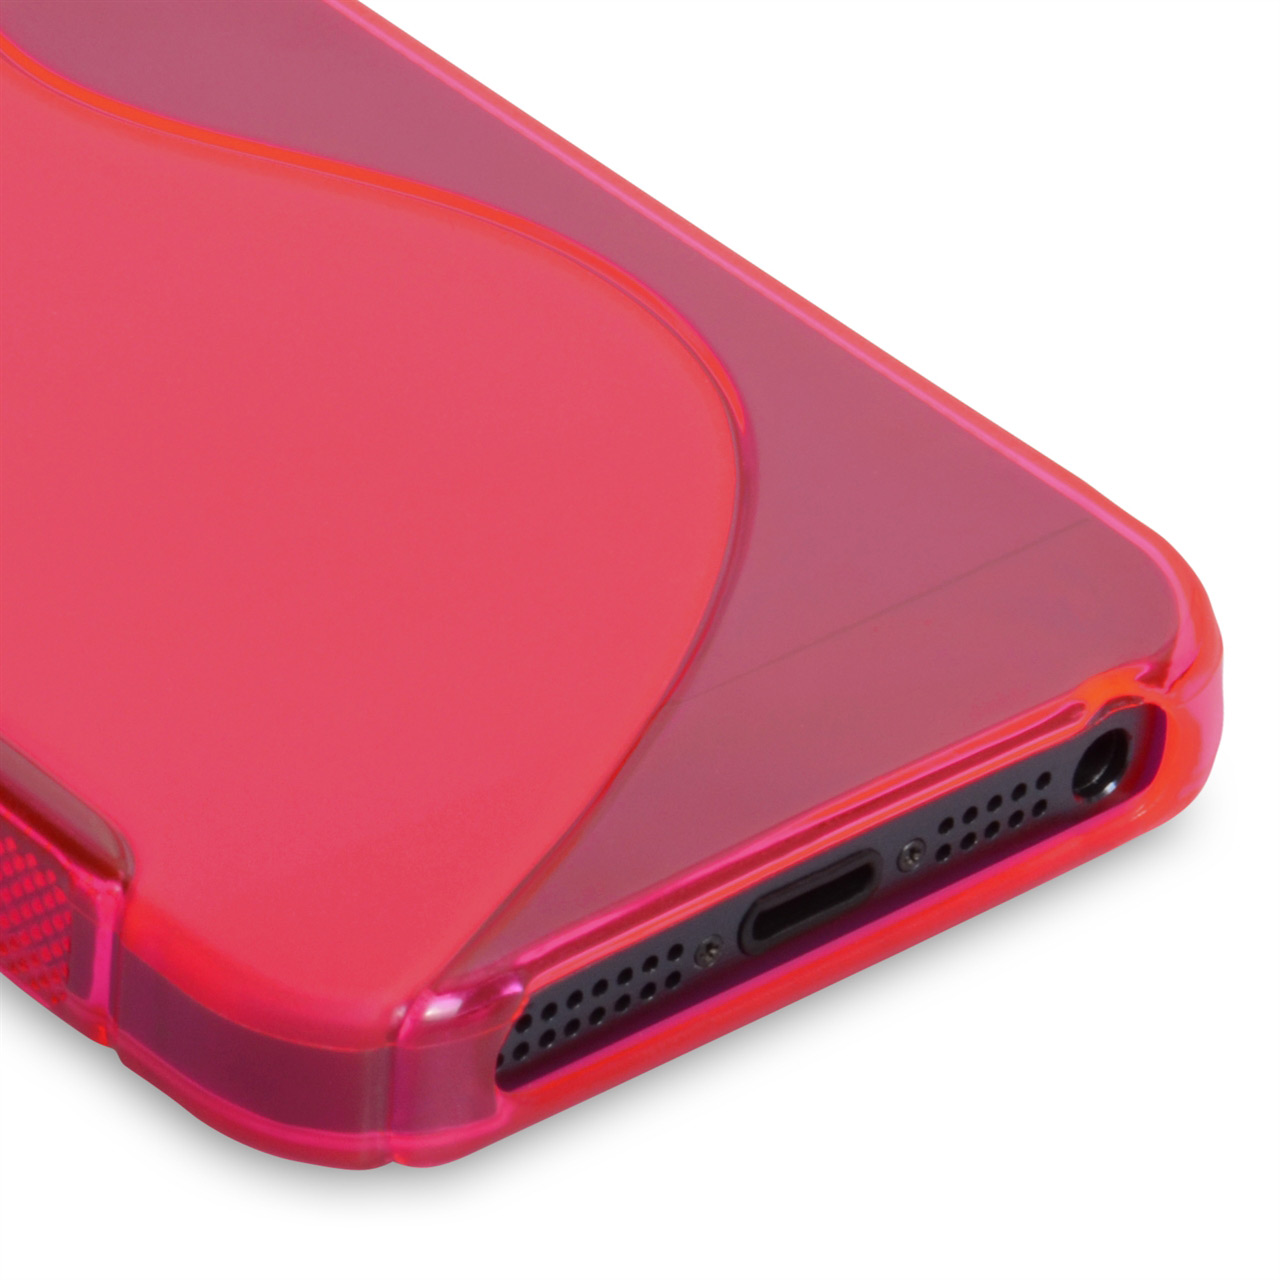 Caseflex iPhone 5 / 5S S-Line Gel Case - Hot Pink